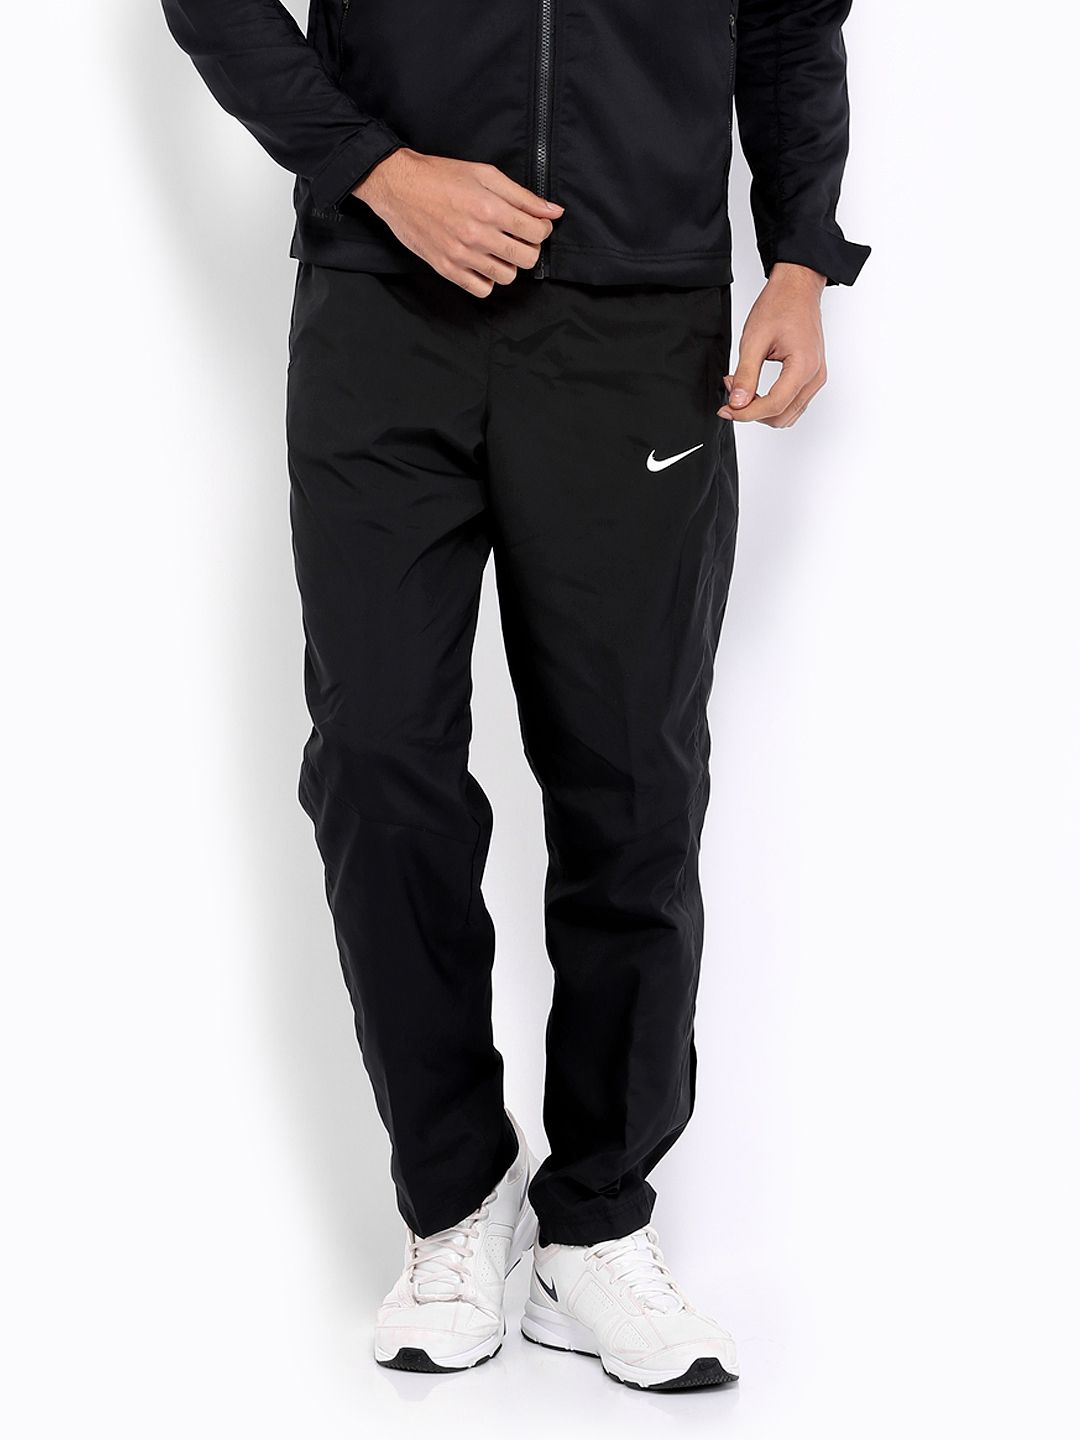 Buy Nike Black Season NSW Track Pants - 293 - Apparel for Men - 354699